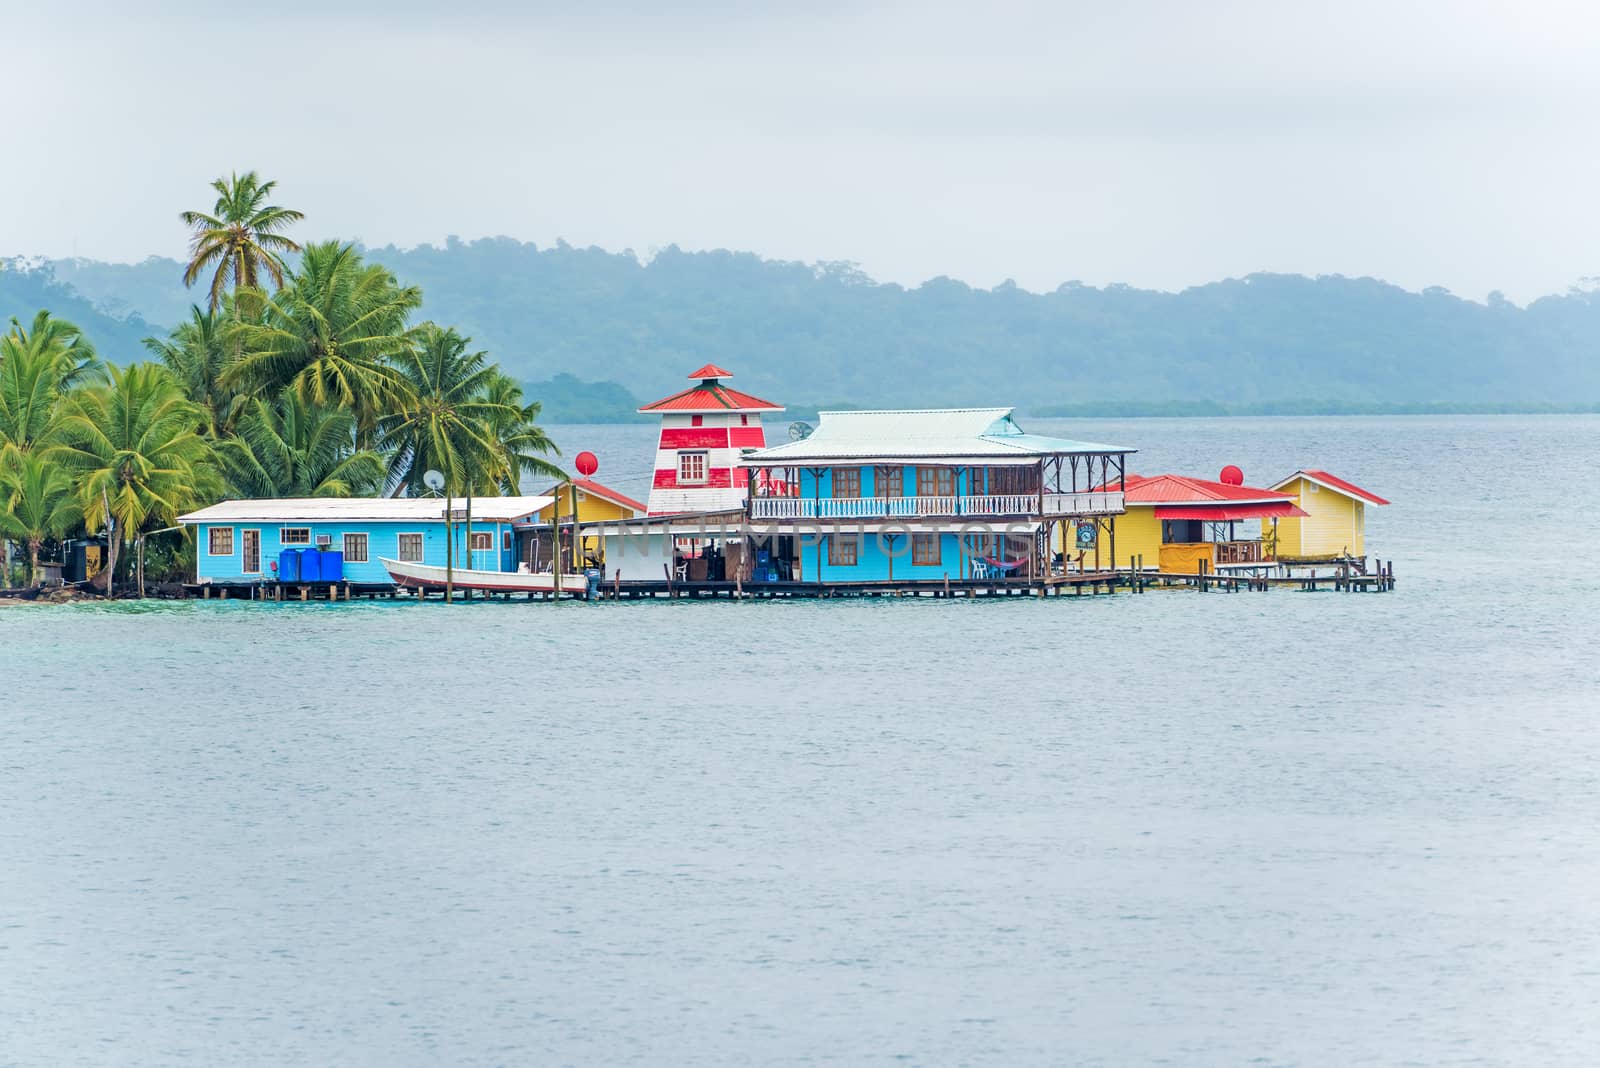 Bocas del Toro, Panama by Marcus